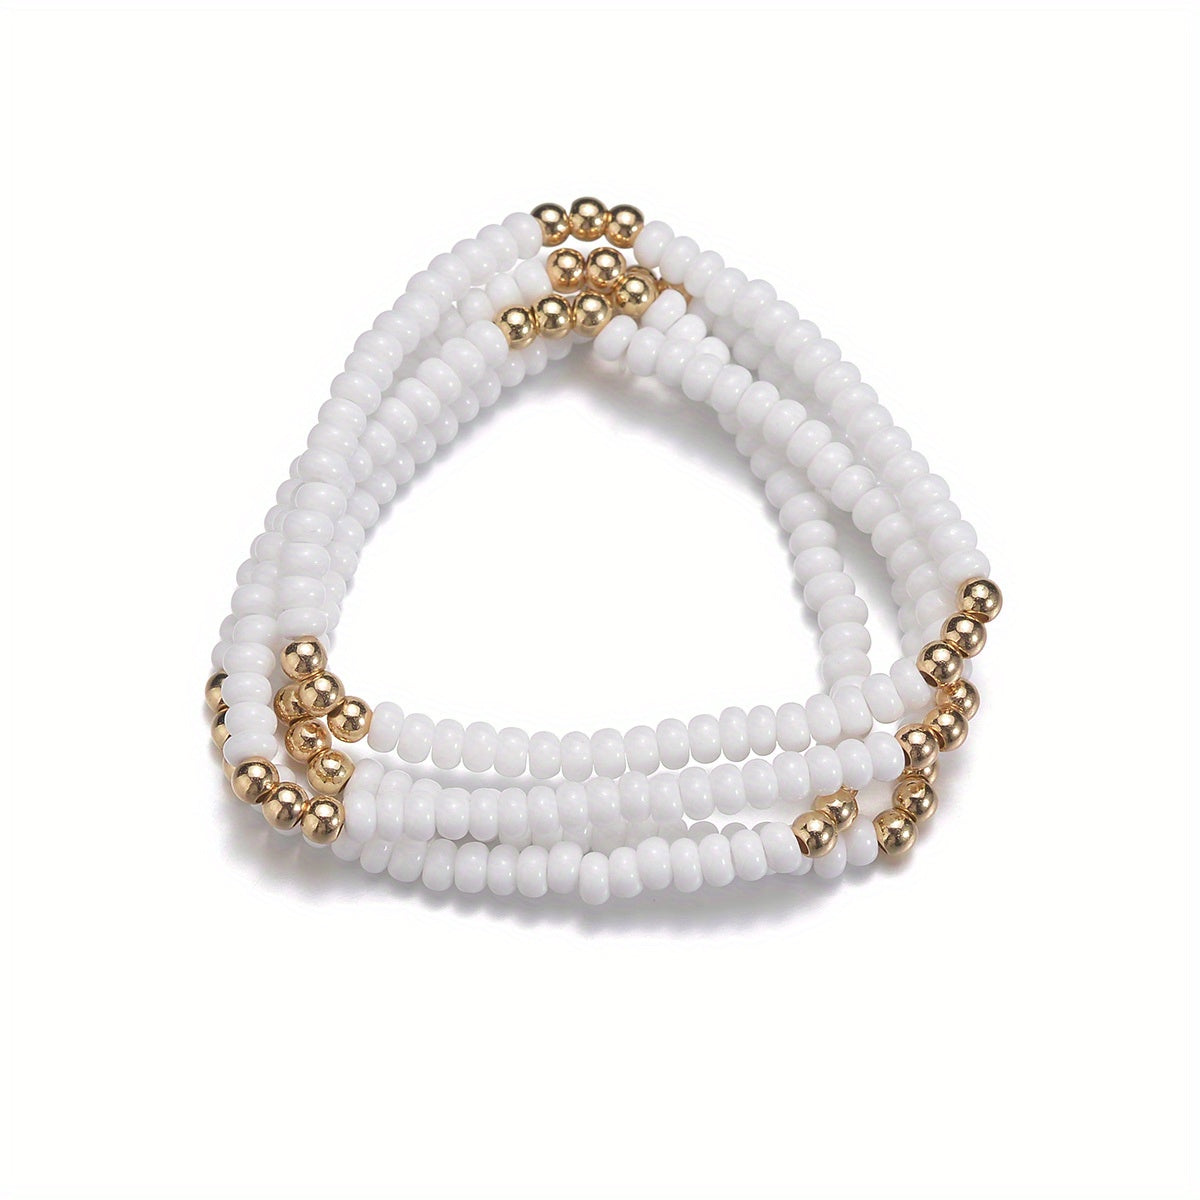 4pcs Boho White Resin Beads Bracelets Set For Women Girls Jewelry Gift Party Favors